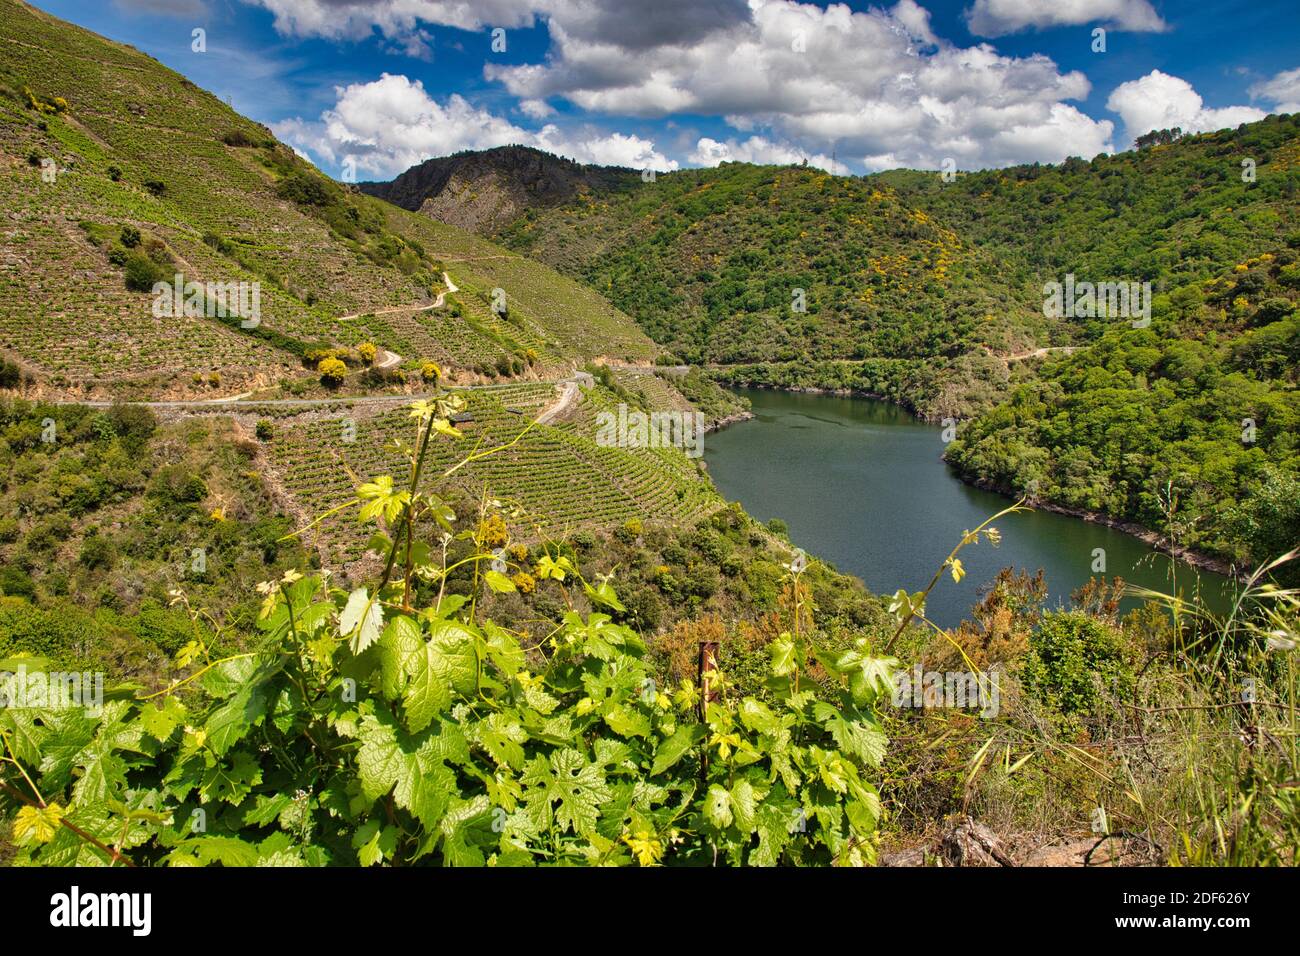 Vineyards, Ribeira Sacra, Heroic Viticulture, Sil river canyon, Sober, Lugo, Galicia, Spain Stock Photo